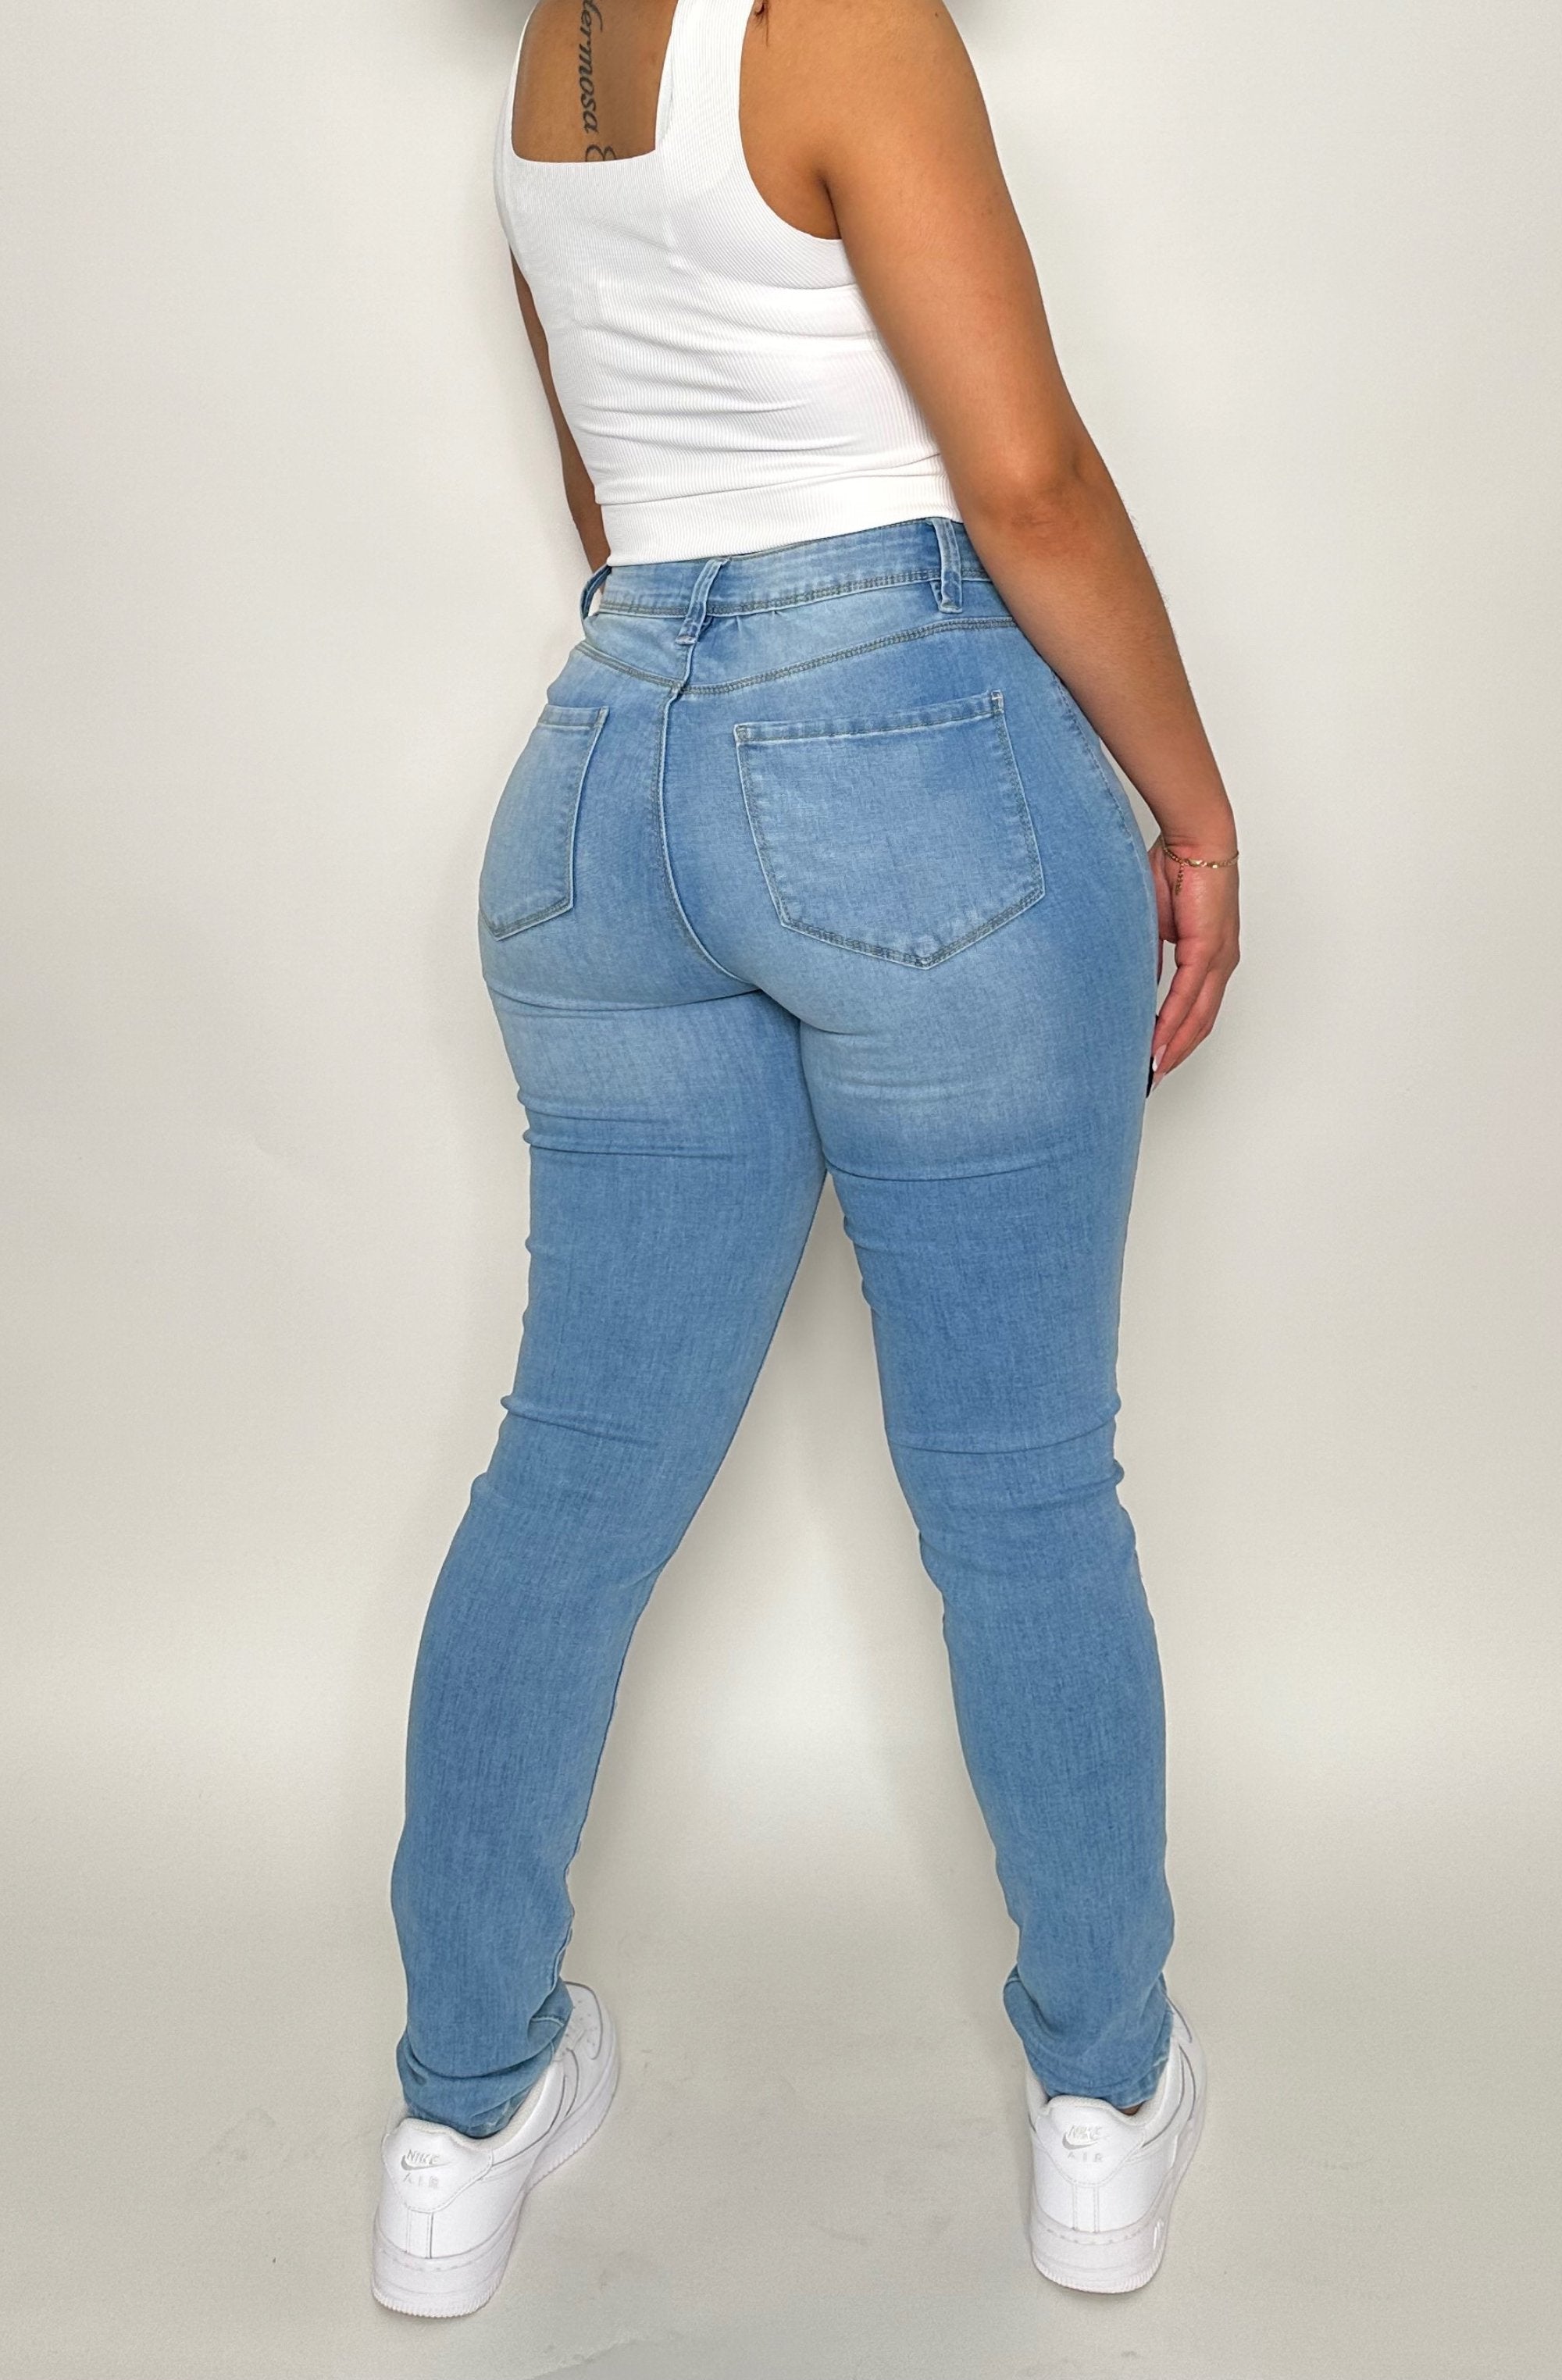 NatxCustomStyle Jeans  | Skinny Jean |